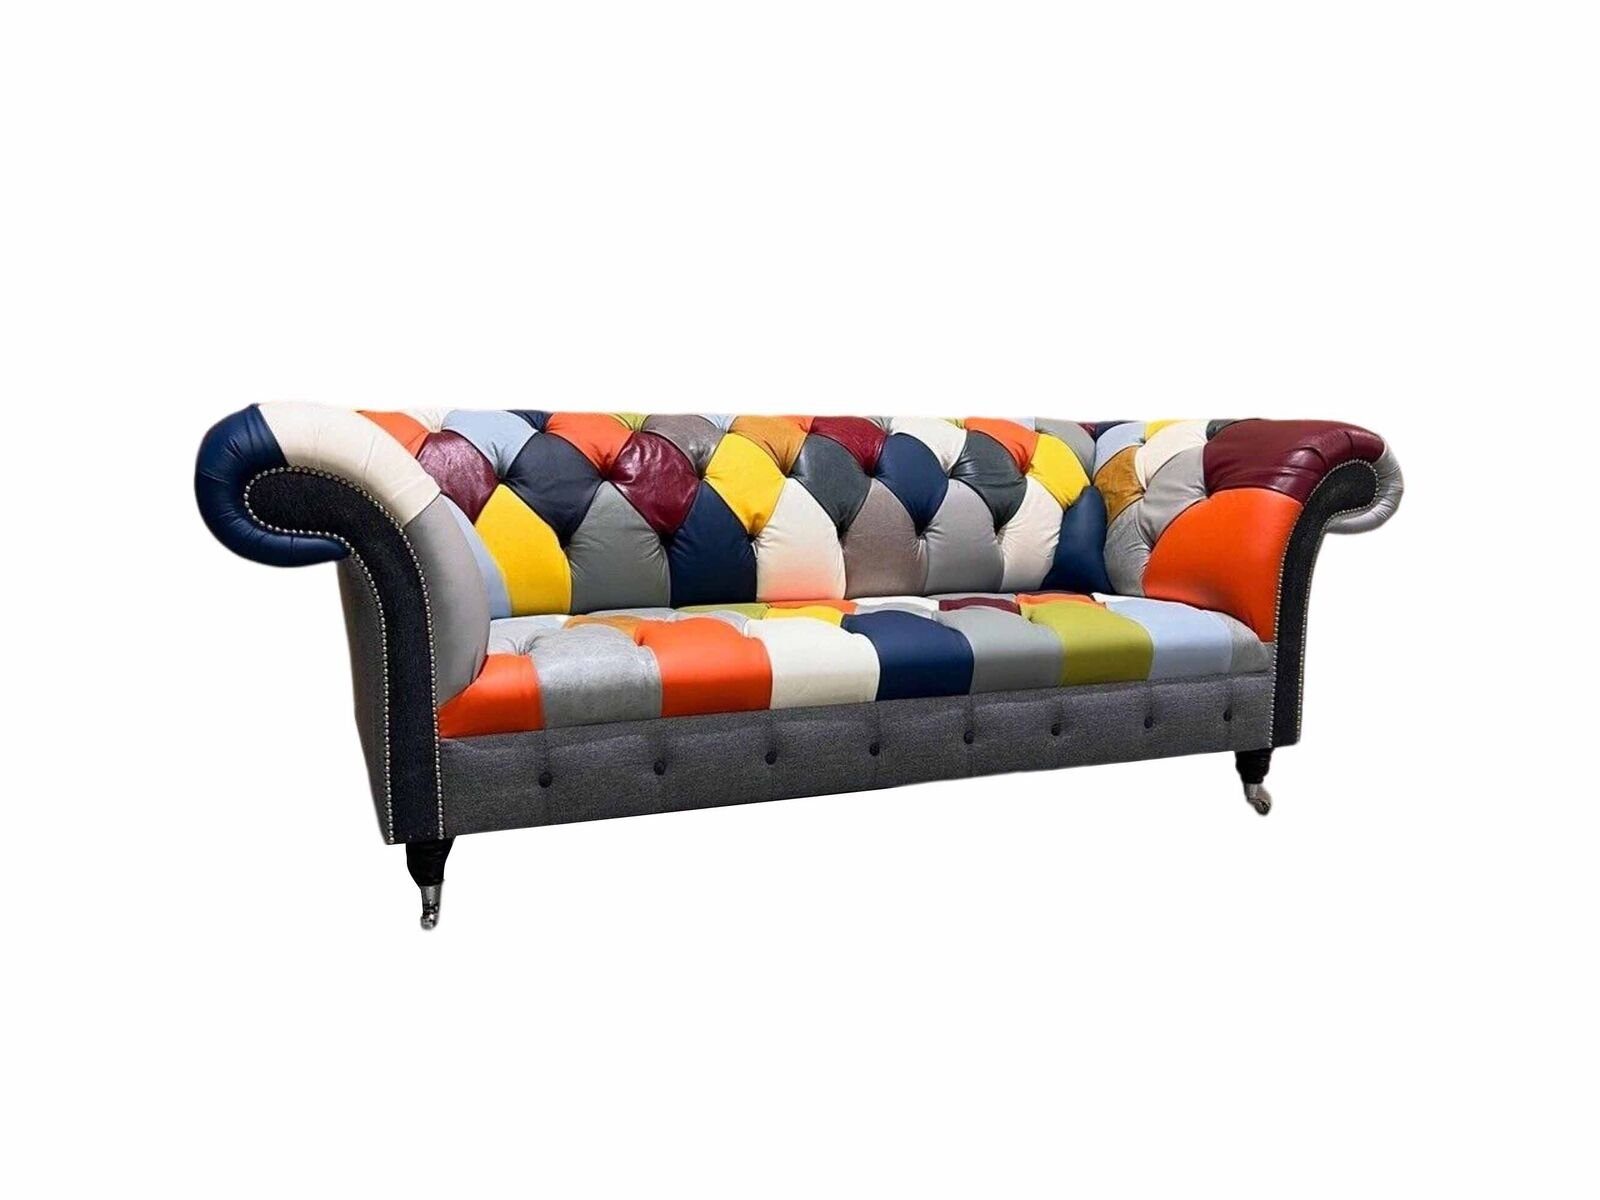 JVmoebel Sofa Bunter Chesterfield 3 Sitzer Stoff Design Couch Polster Textil Neu, Made in Europe